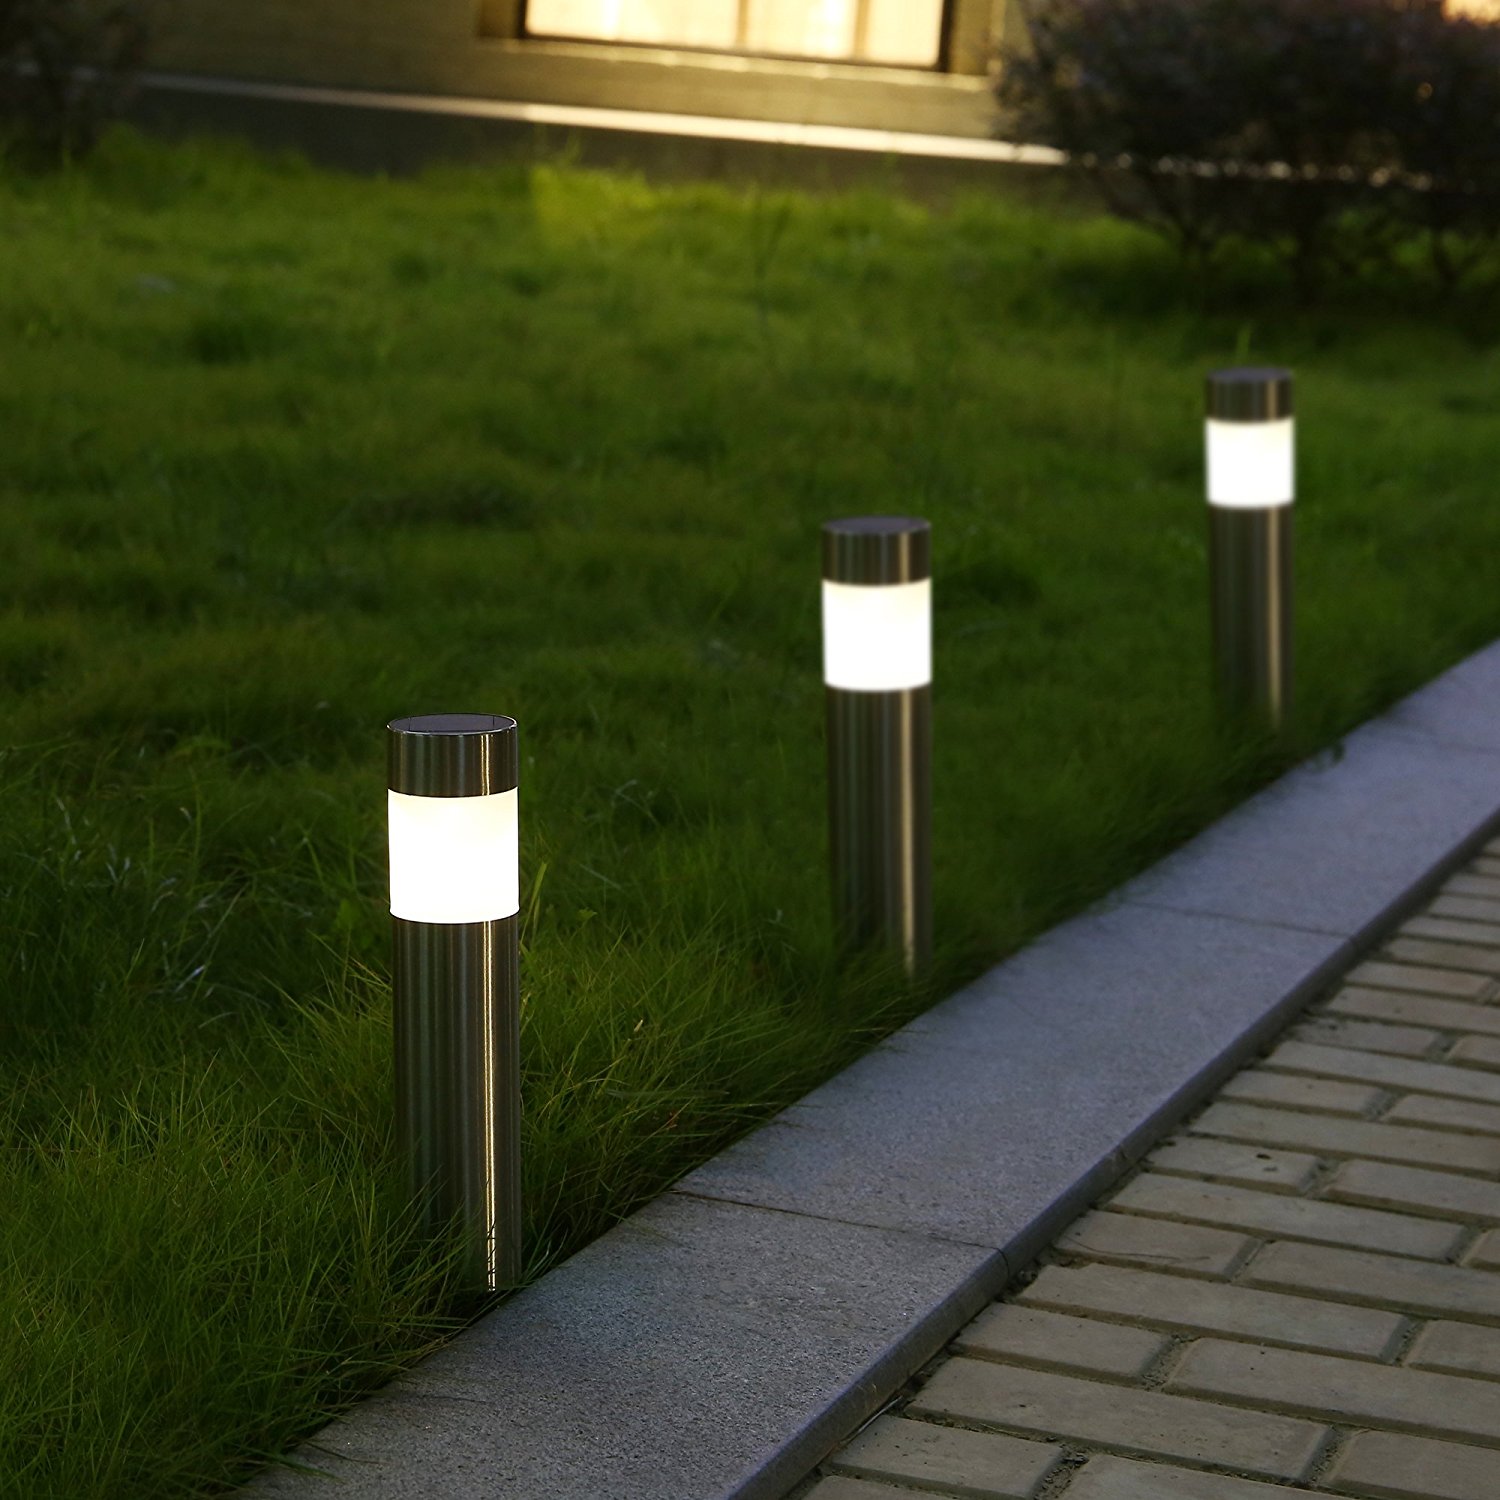 Solar garden lamp inclination design determines service life